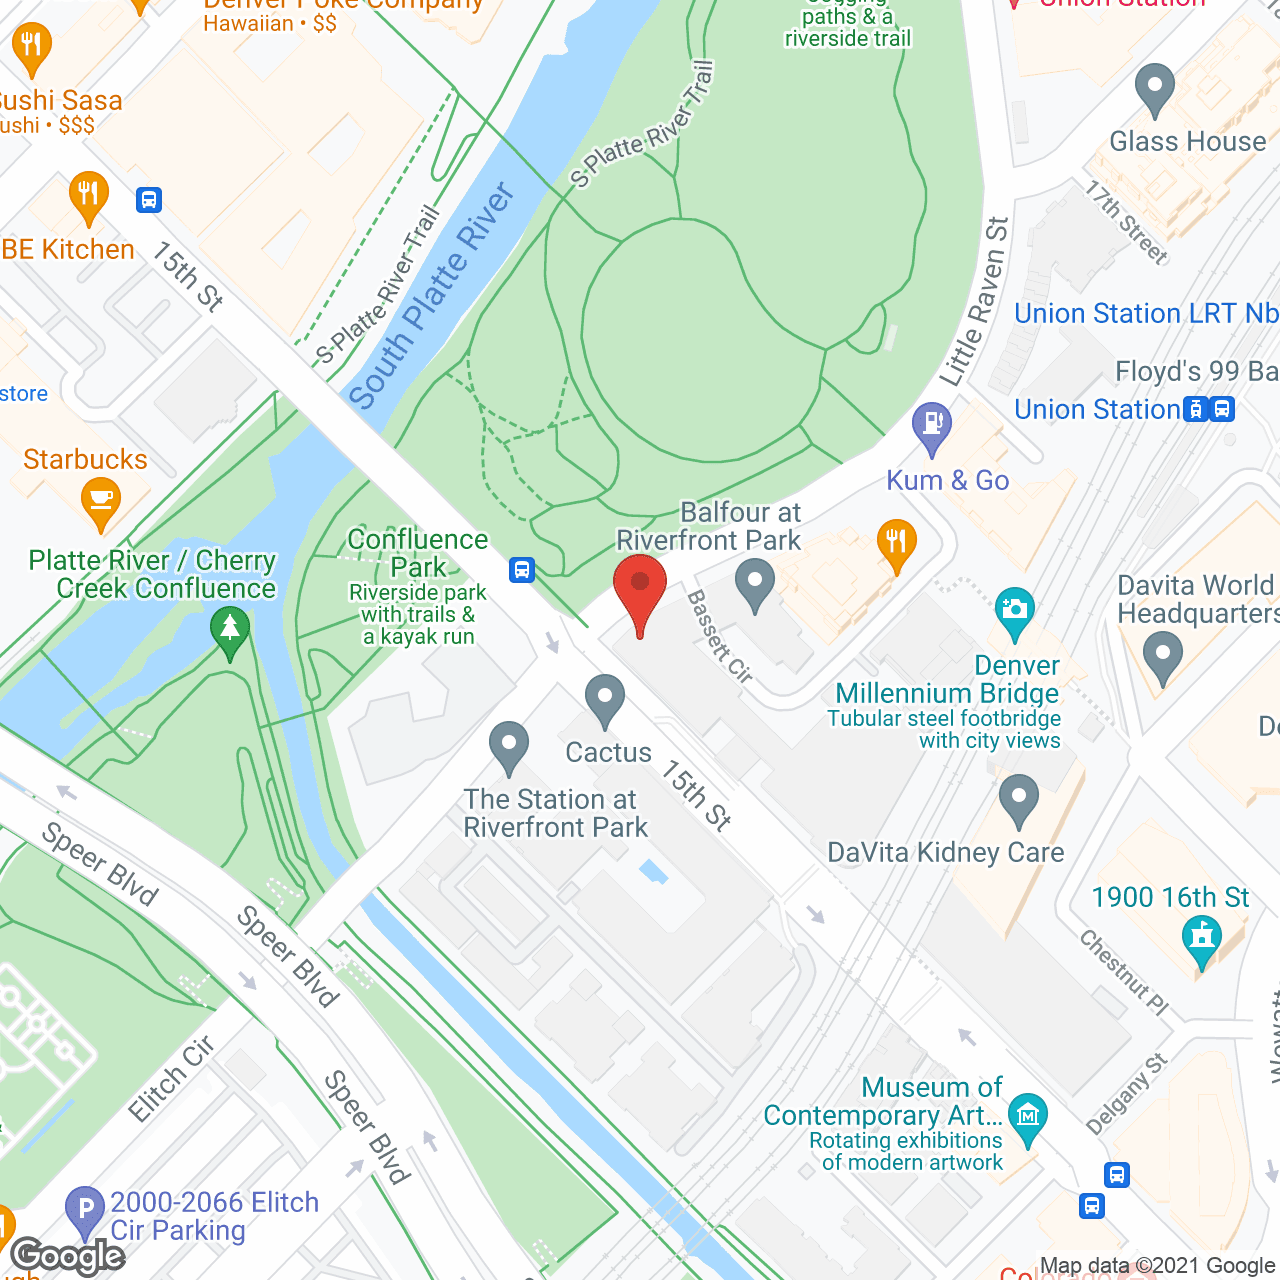 Balfour at Riverfront Park in google map